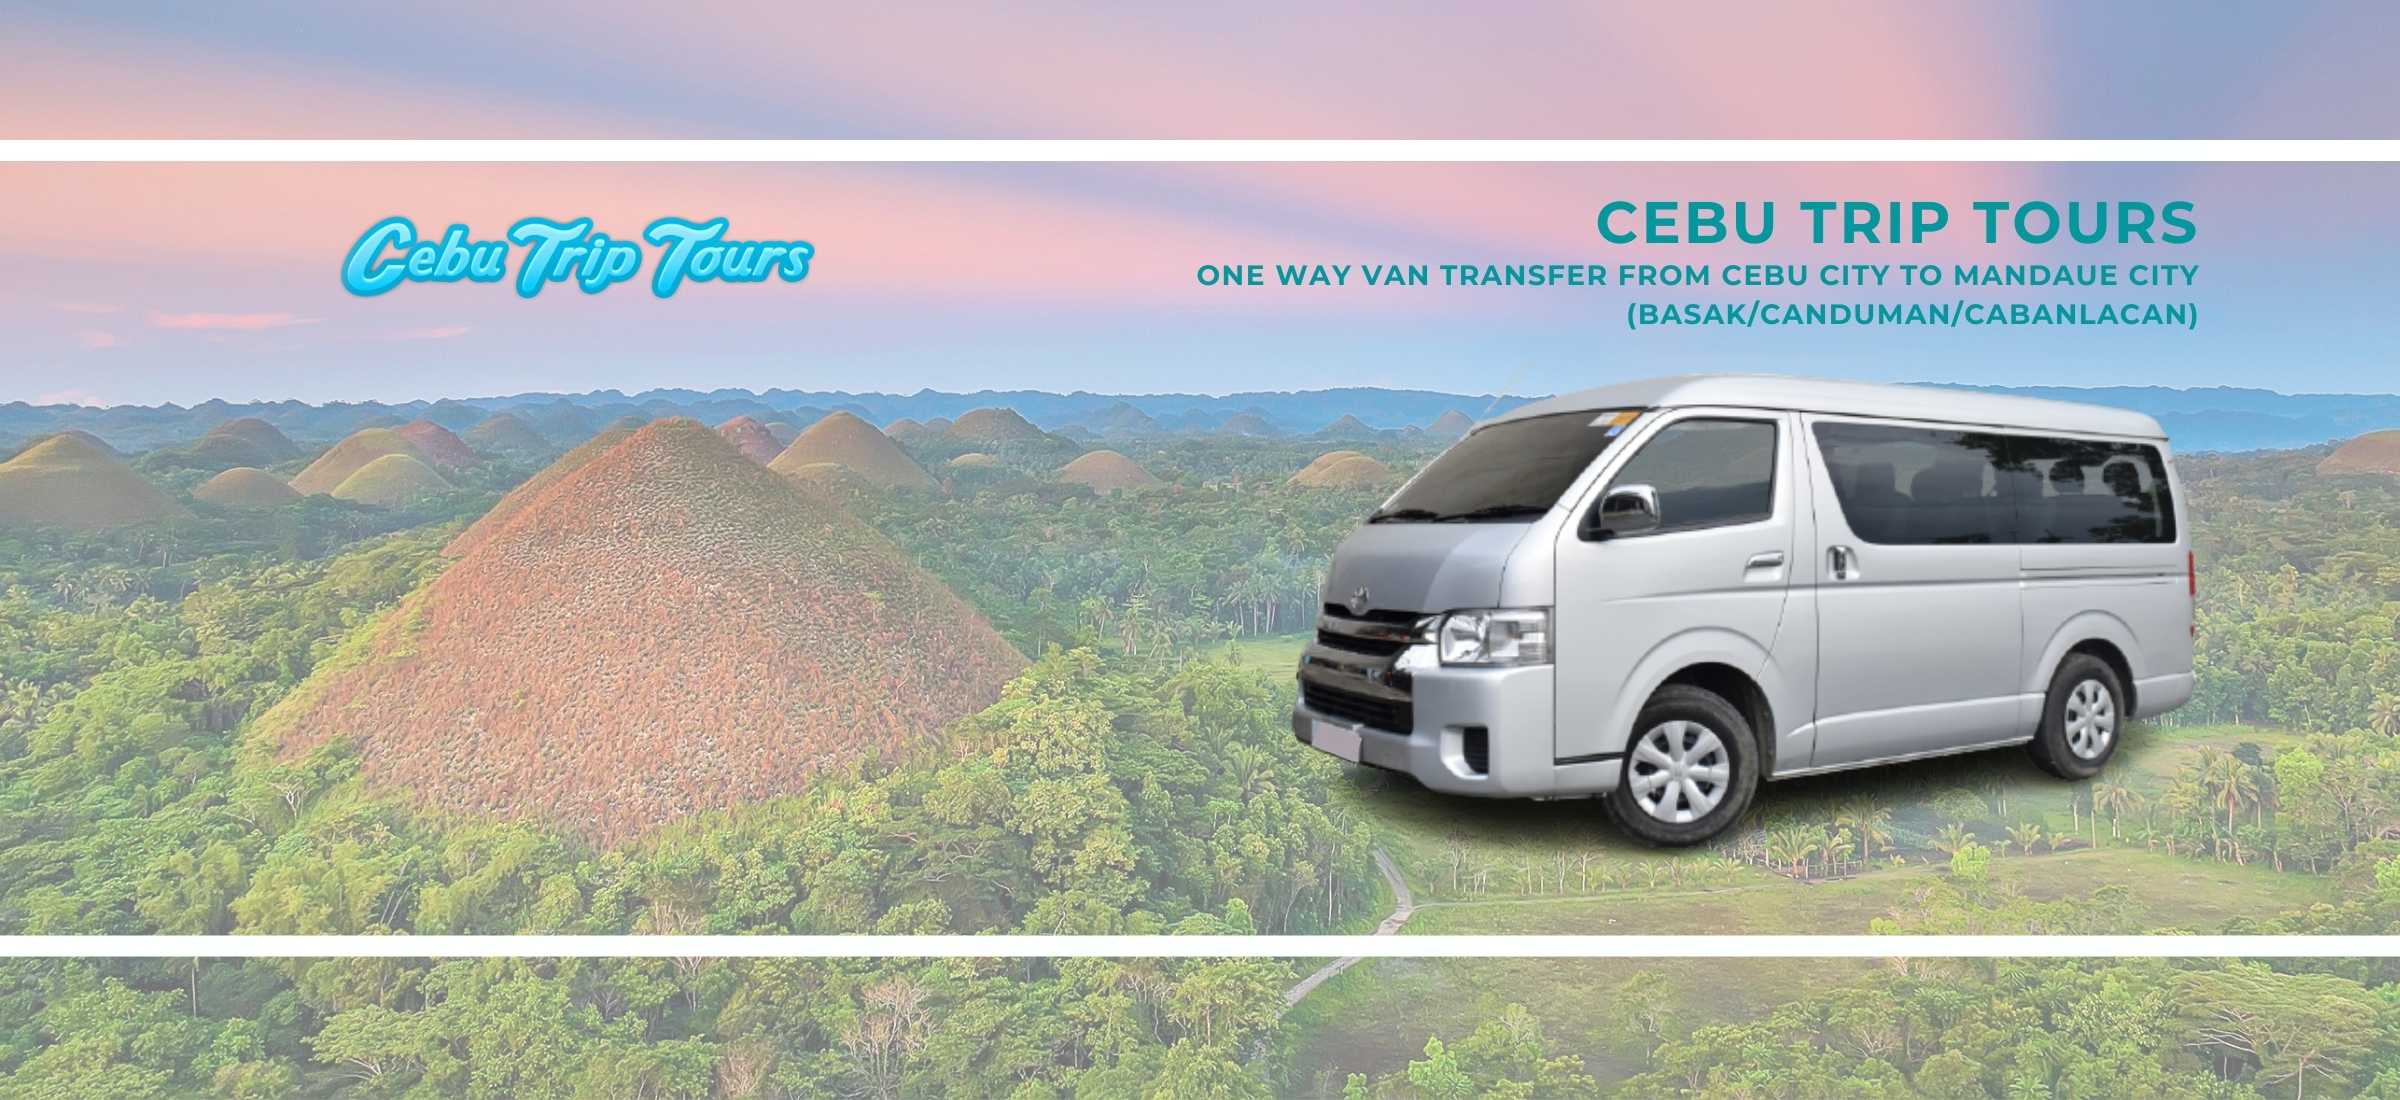 One Way Transfer from Cebu City to Mandaue City (Basak/Canduman/Cabanlacan)